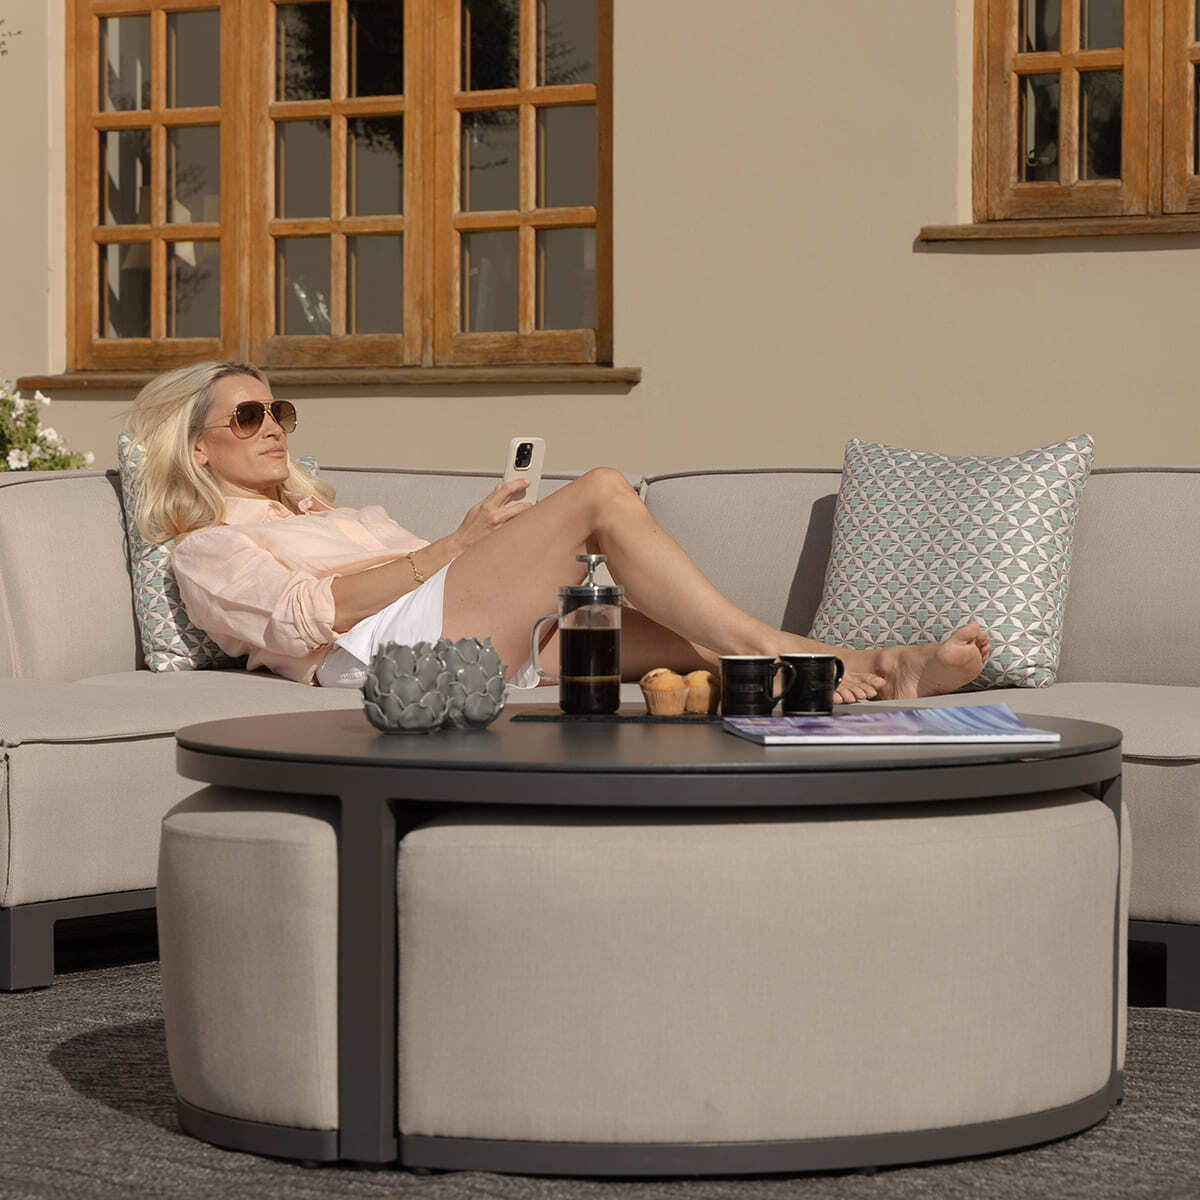 Maze - Outdoor Fabric Ibiza Large Corner Sofa Set with Round Coffee Table - Oatmeal product image